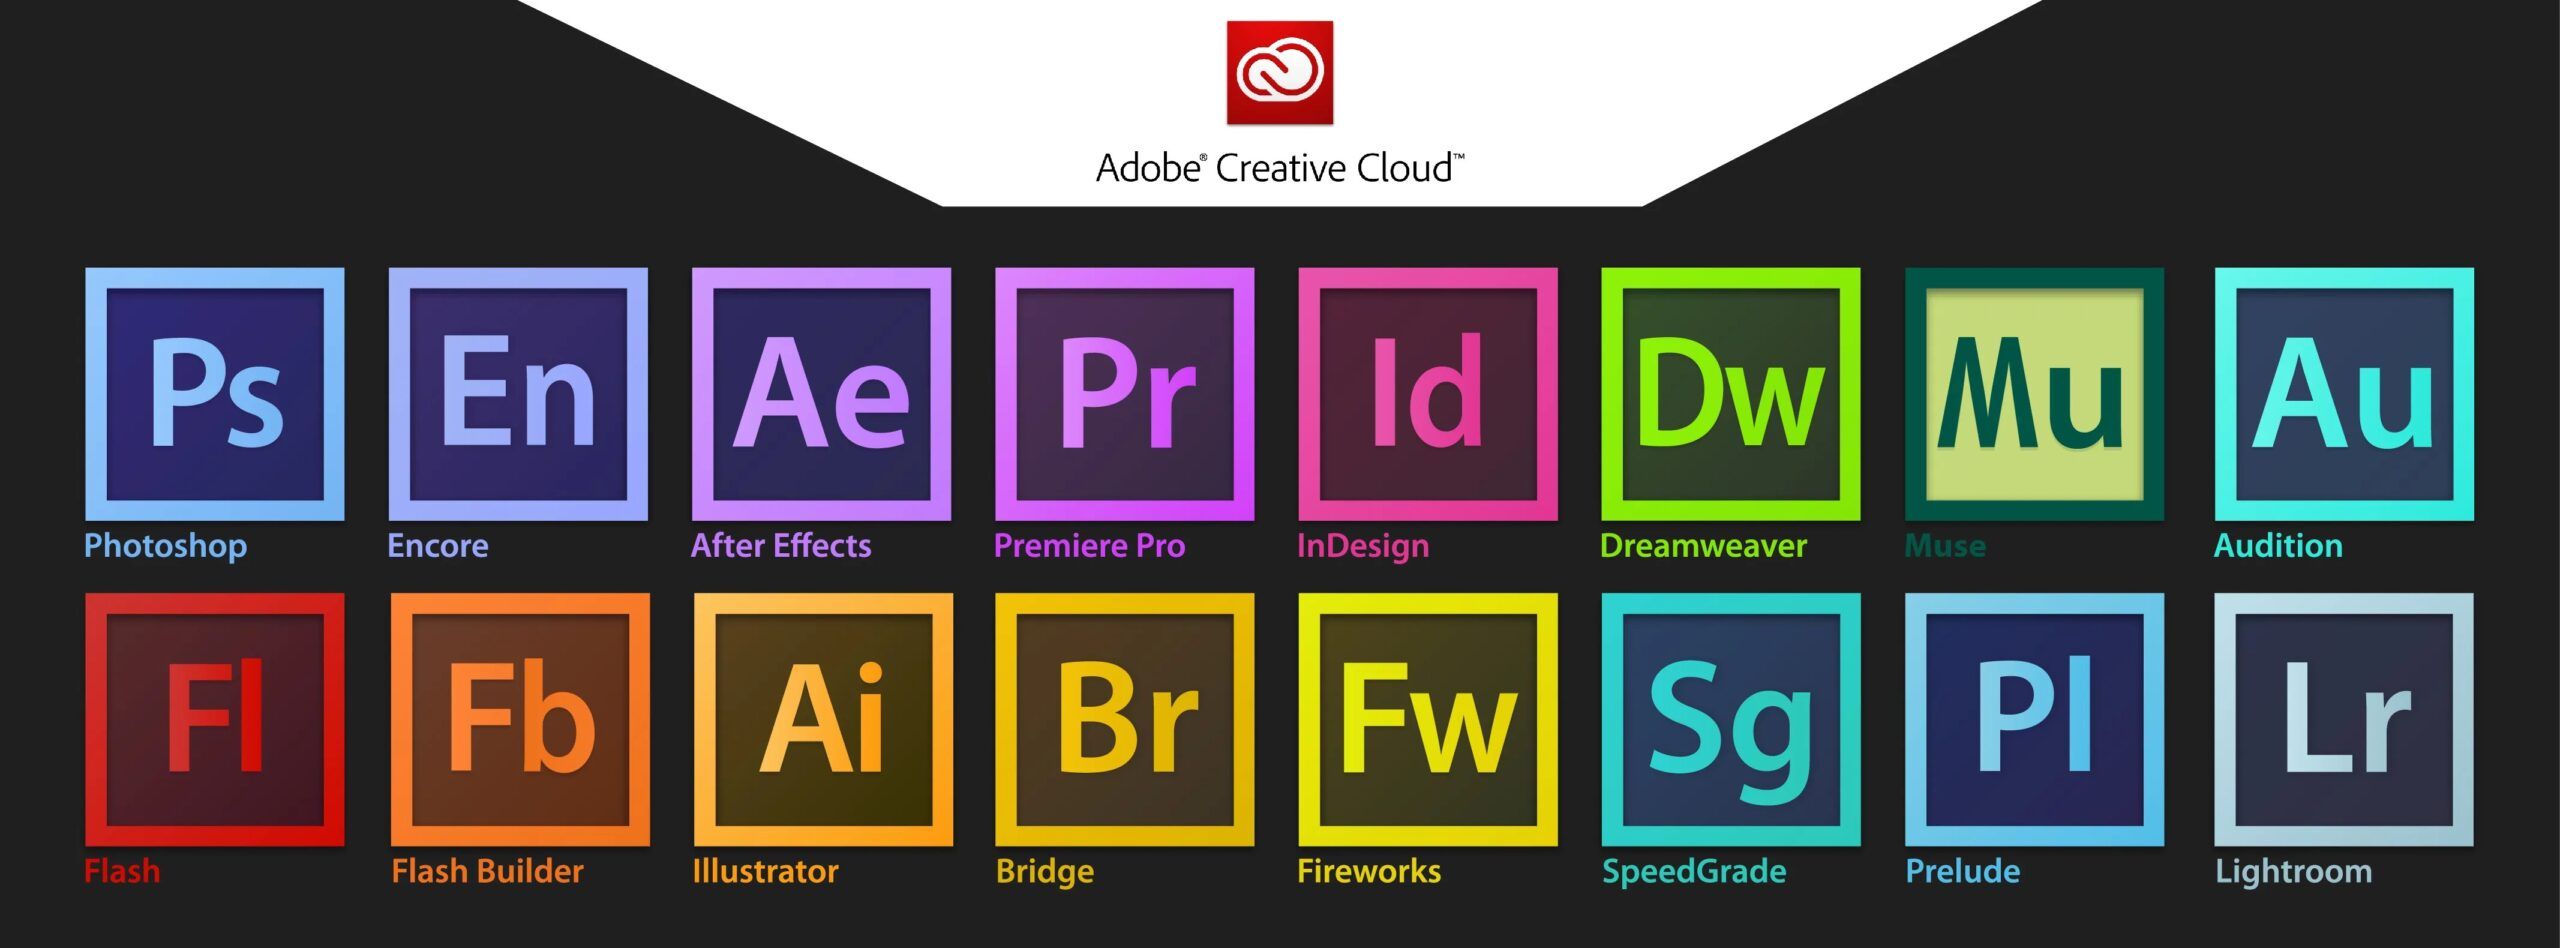 Adobe_CC